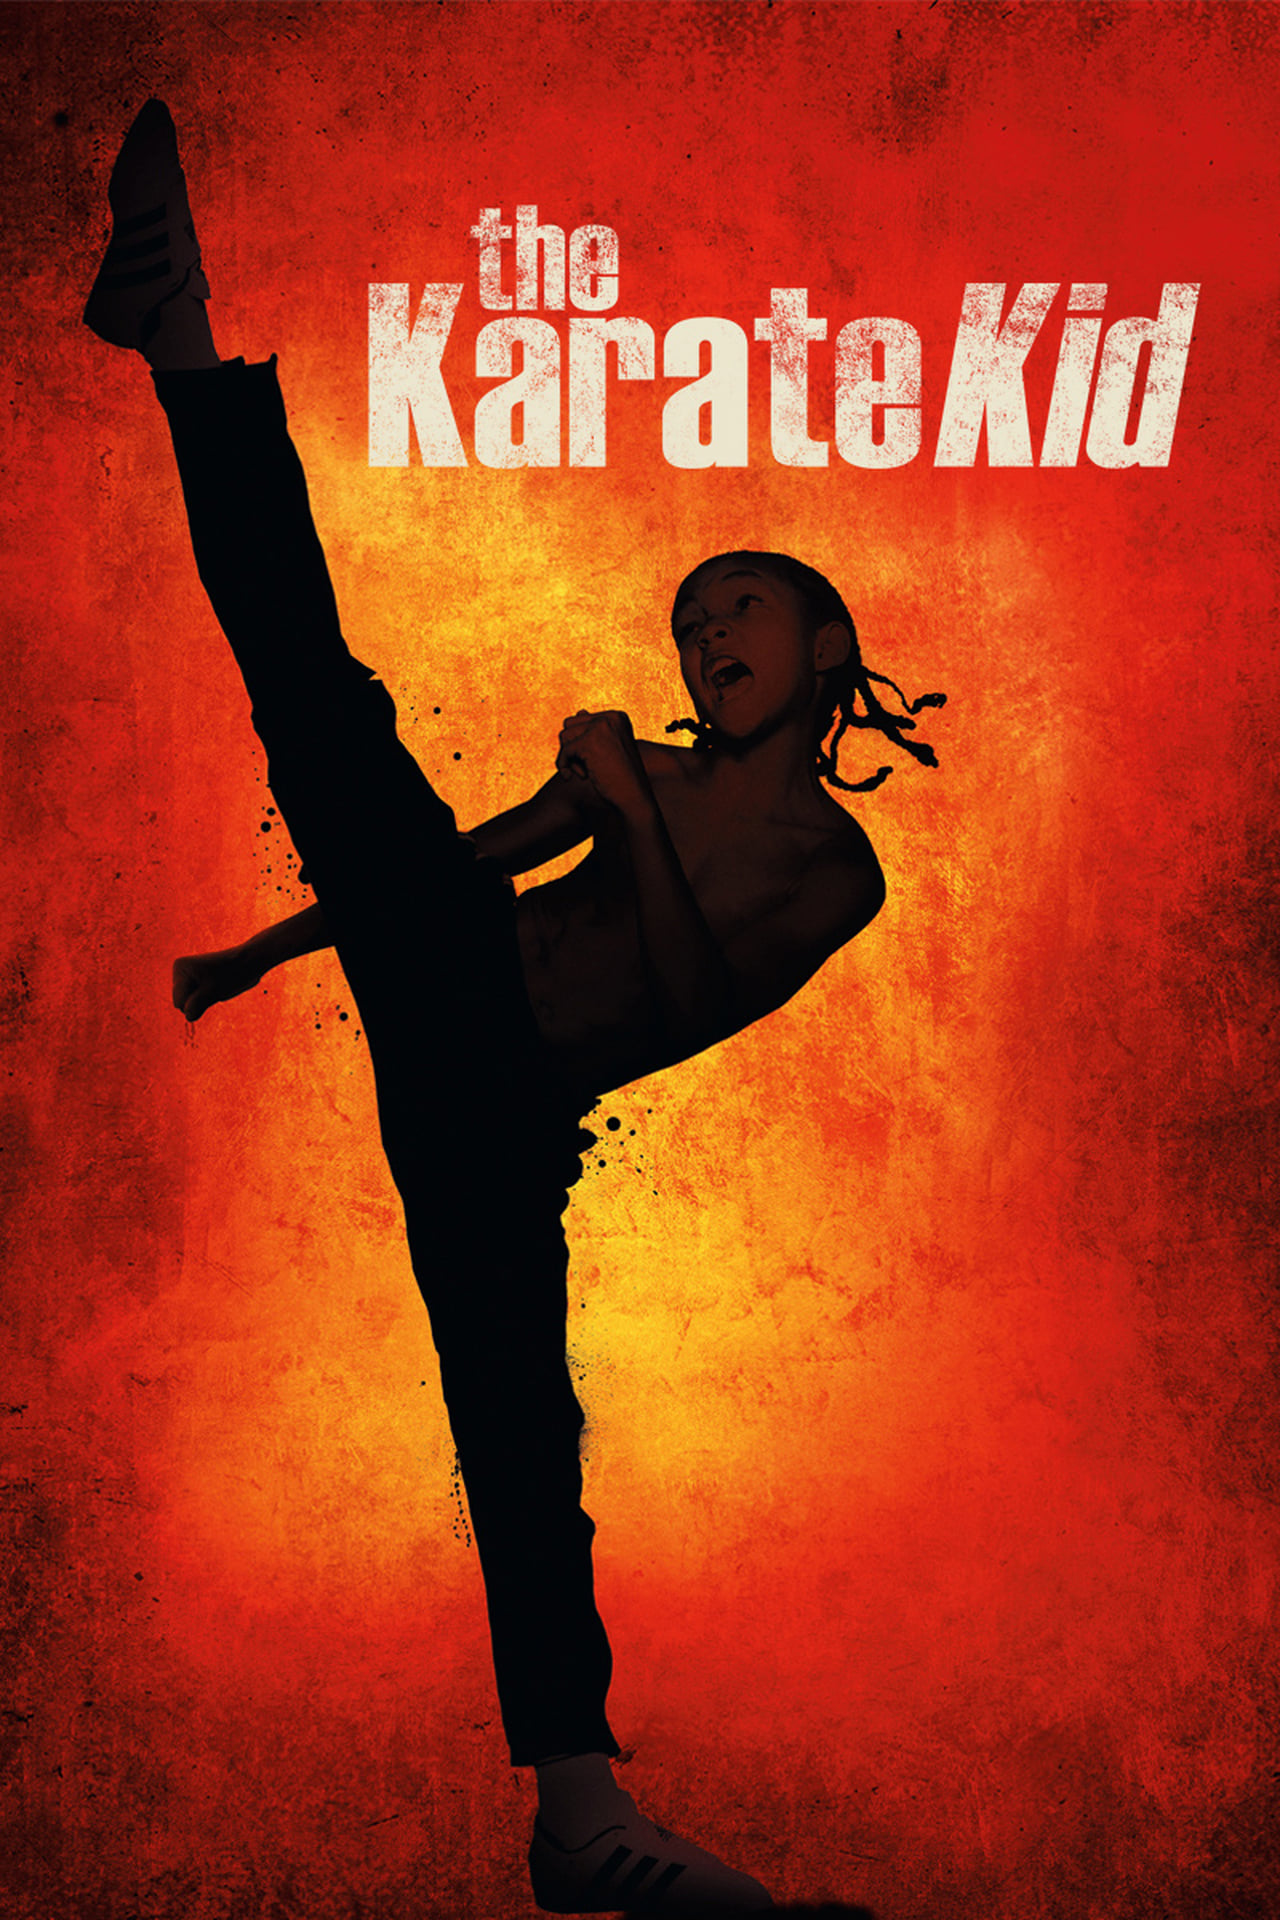 watch karate kid 2010 online free